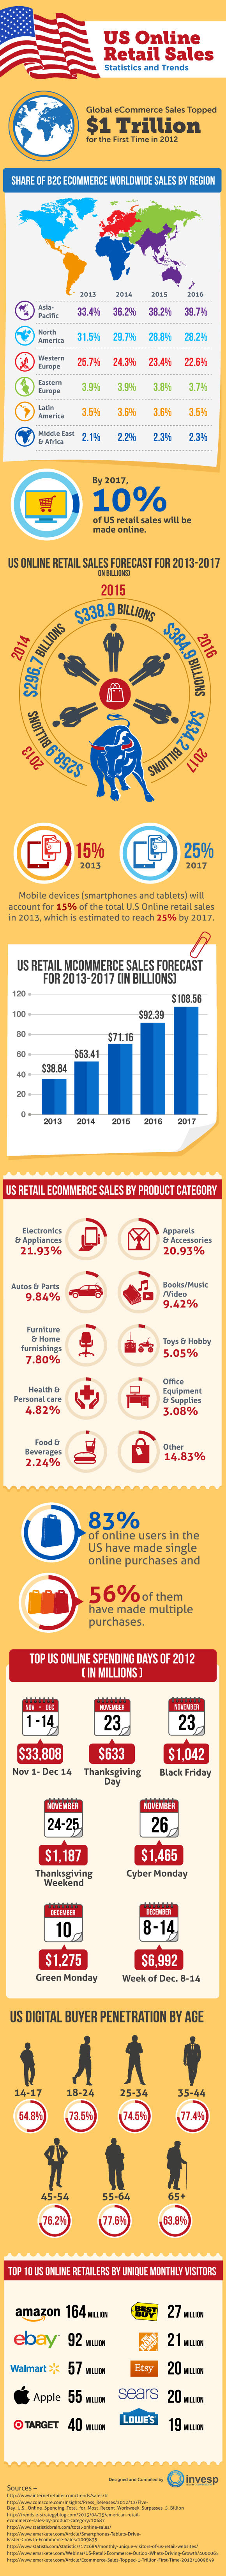 us-online-retail-sales